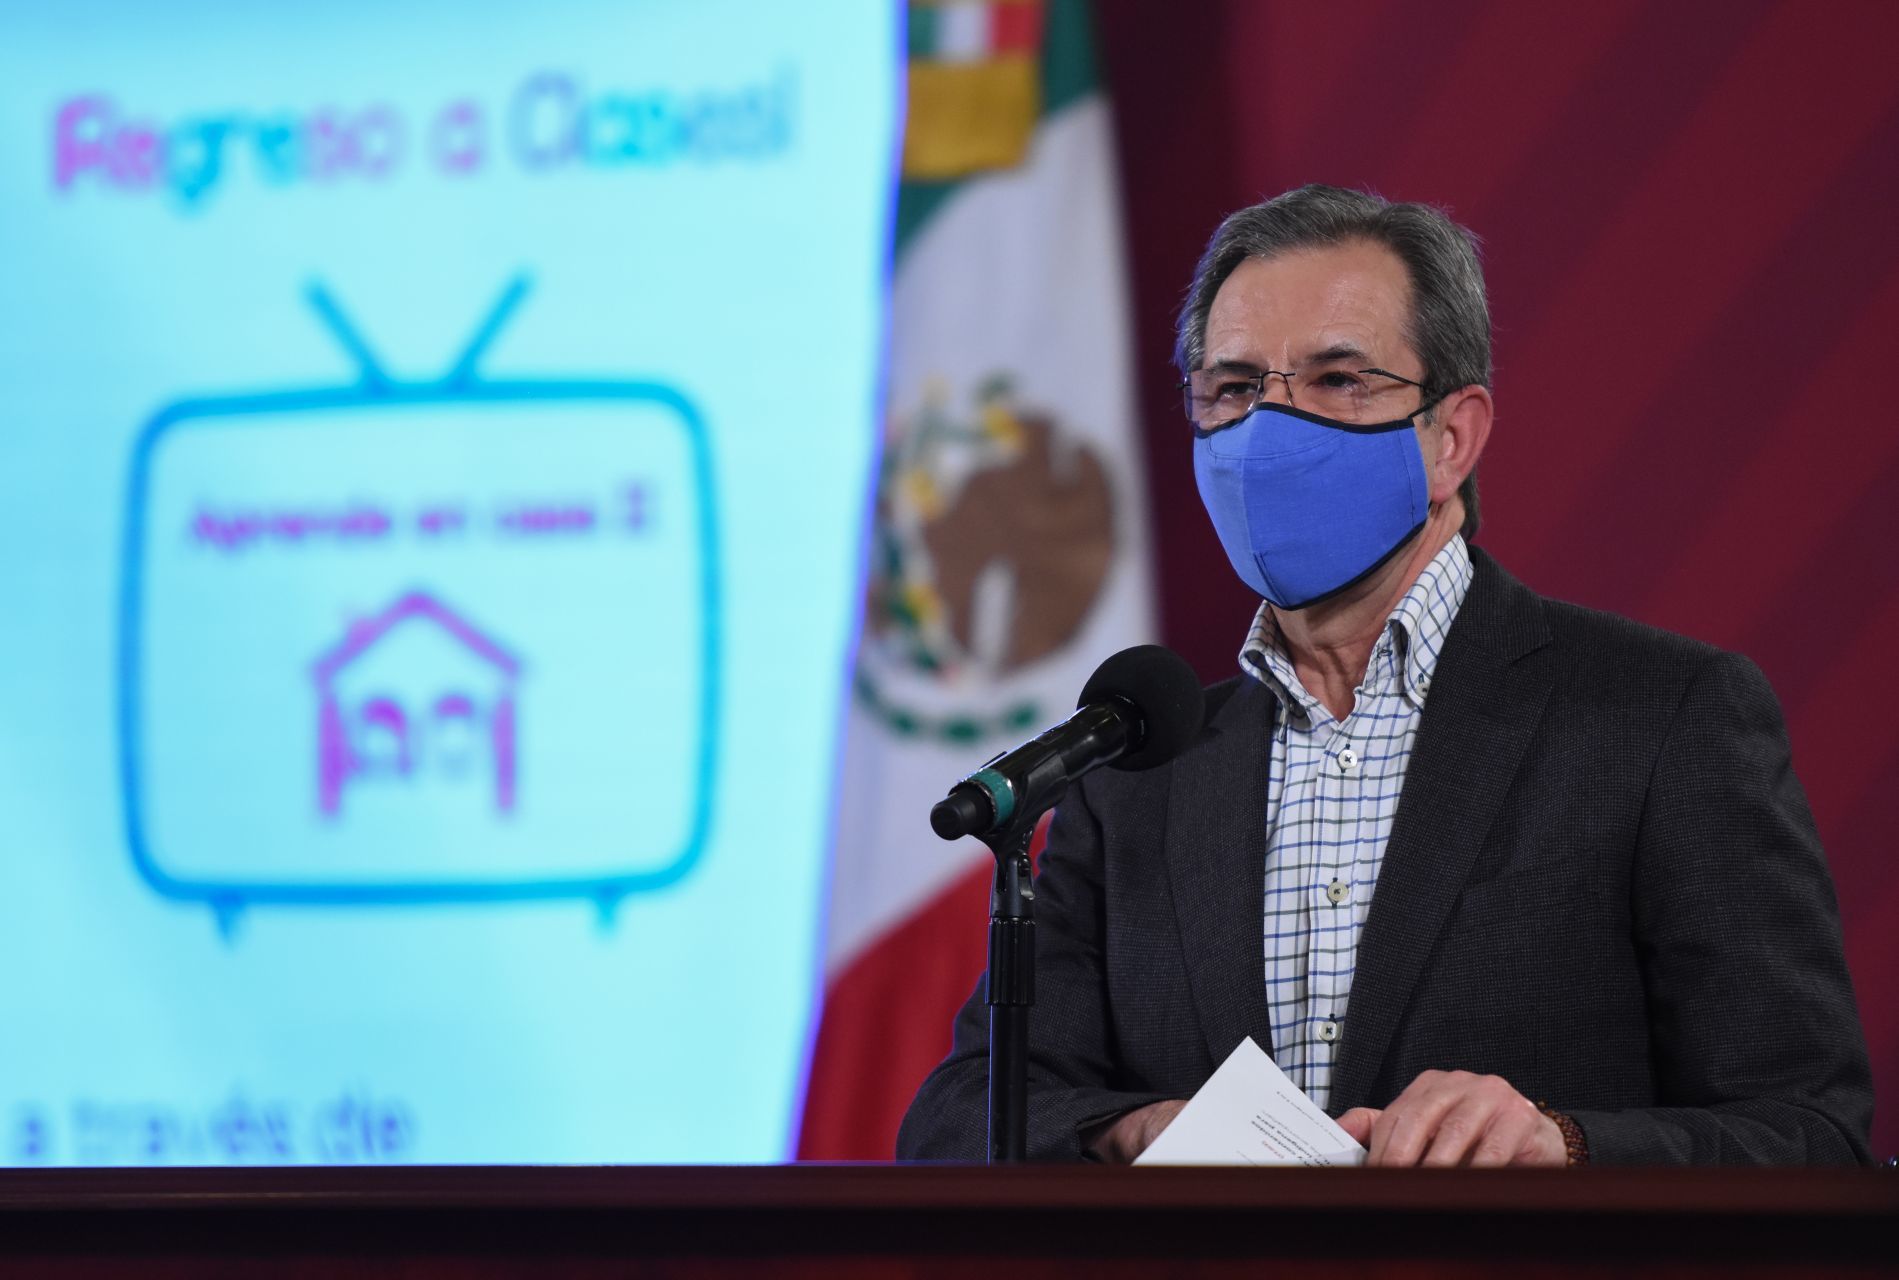 Esteban Moctezuma to be Mexico's ambassador to the US after Bárcena's retirement